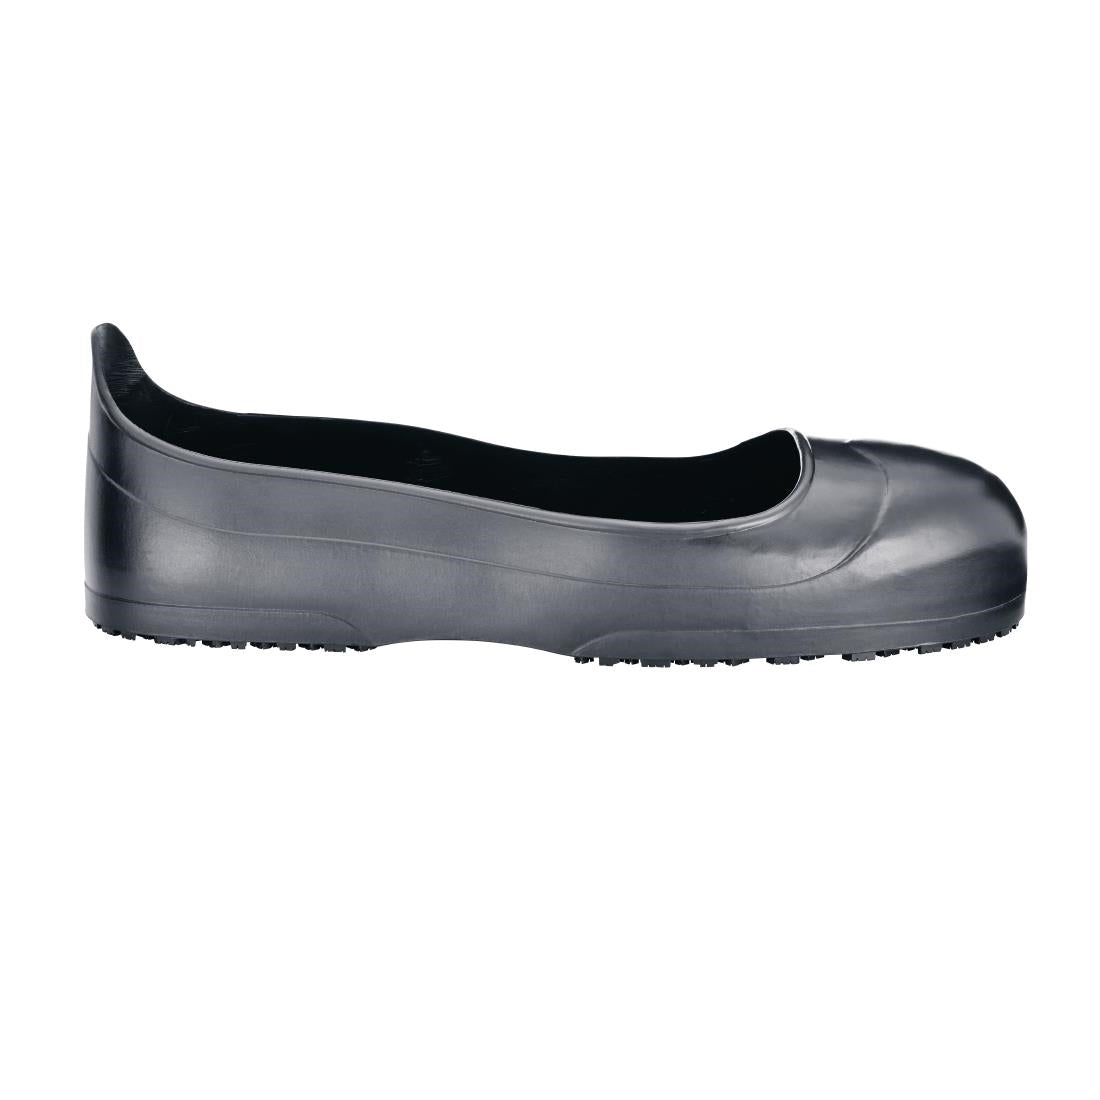 BB614-SP Shoes for Crews Crewguard Overshoes Steel Toe Cap Size SP